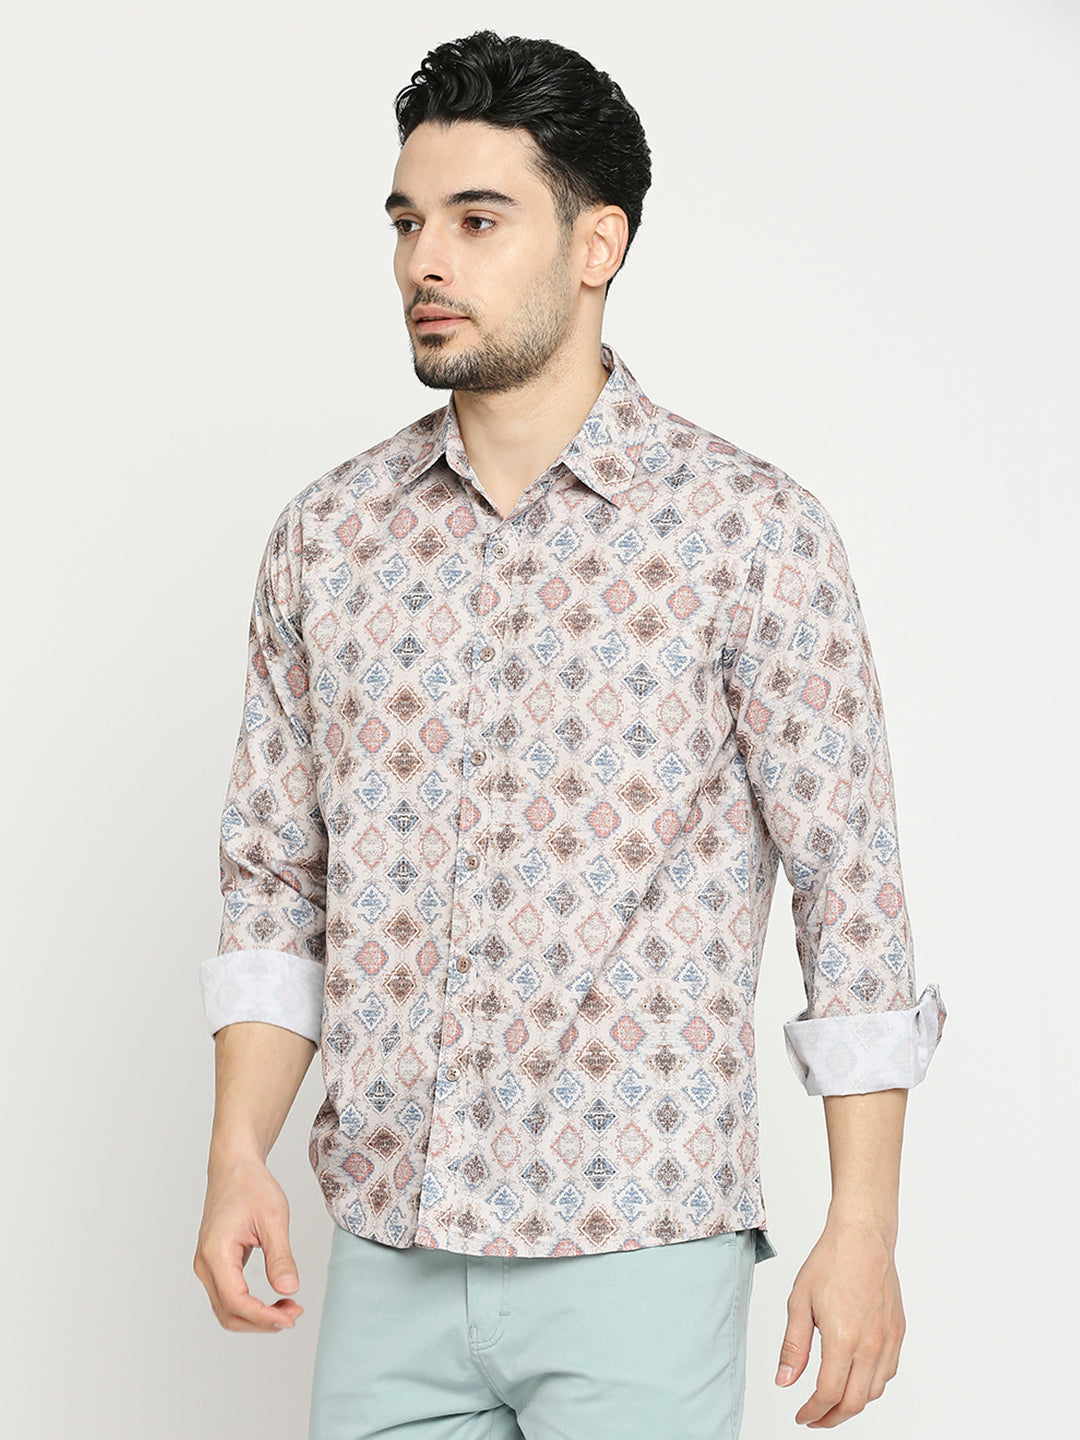 Buy Blamblack Men'S Printed Full Sleeves Regular Fit Spread Collar Shirt